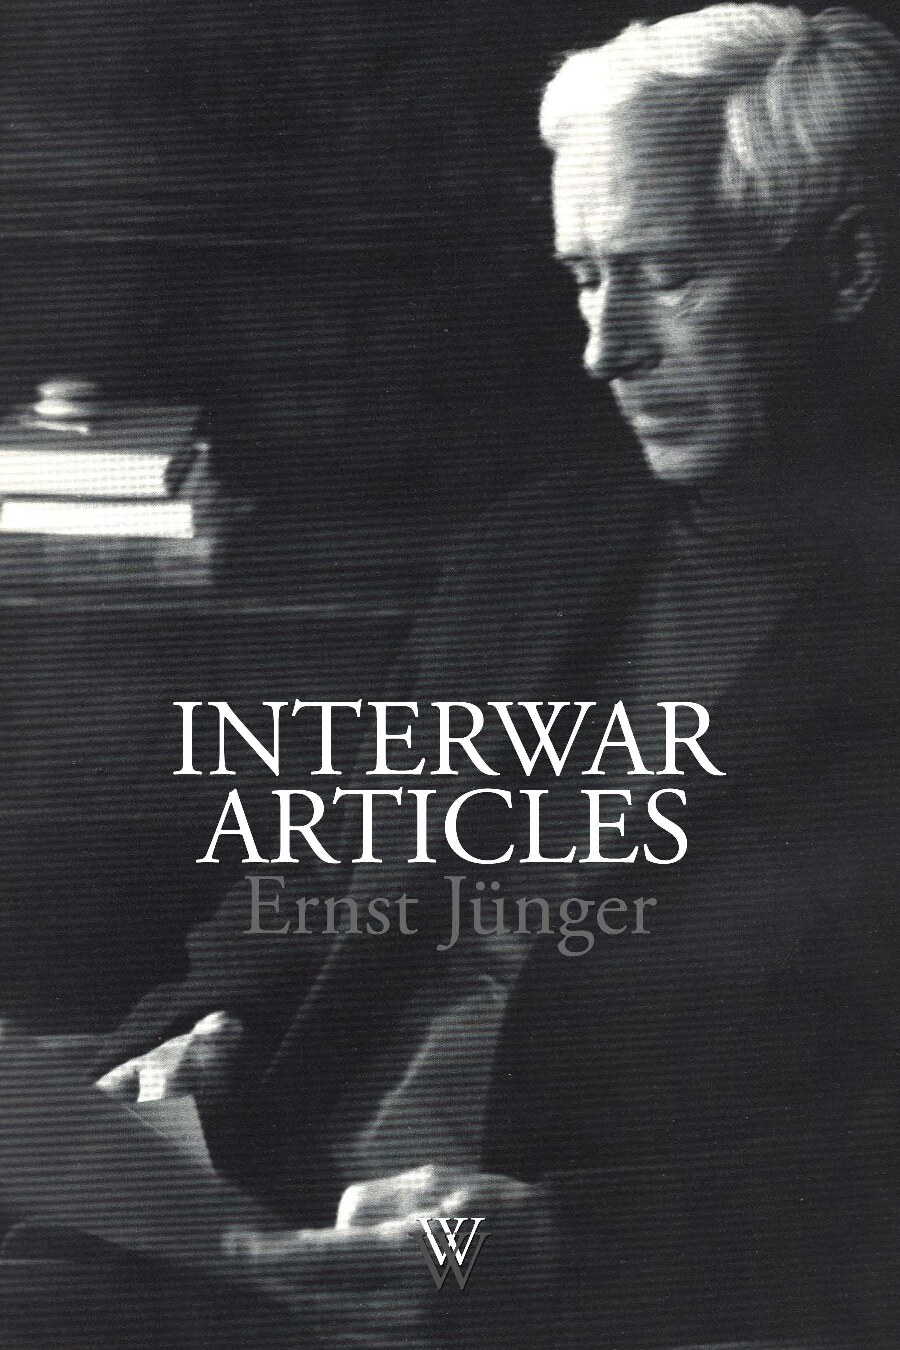 Jünger, Ernst; Interwar Articles